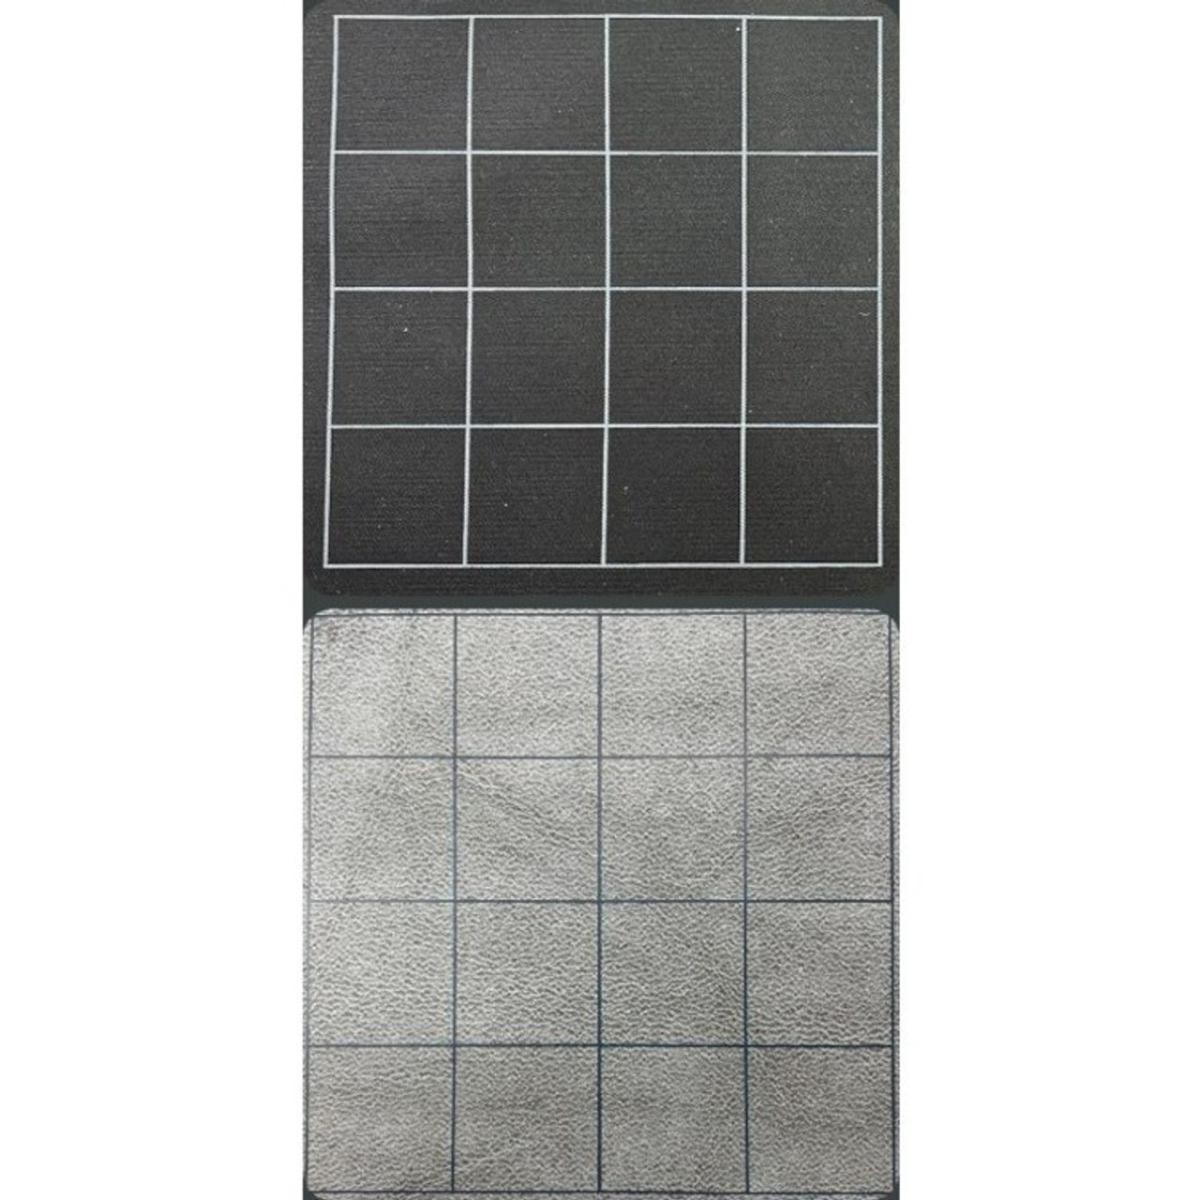 Reversible Squares Megamat Board Game - Black & Grey